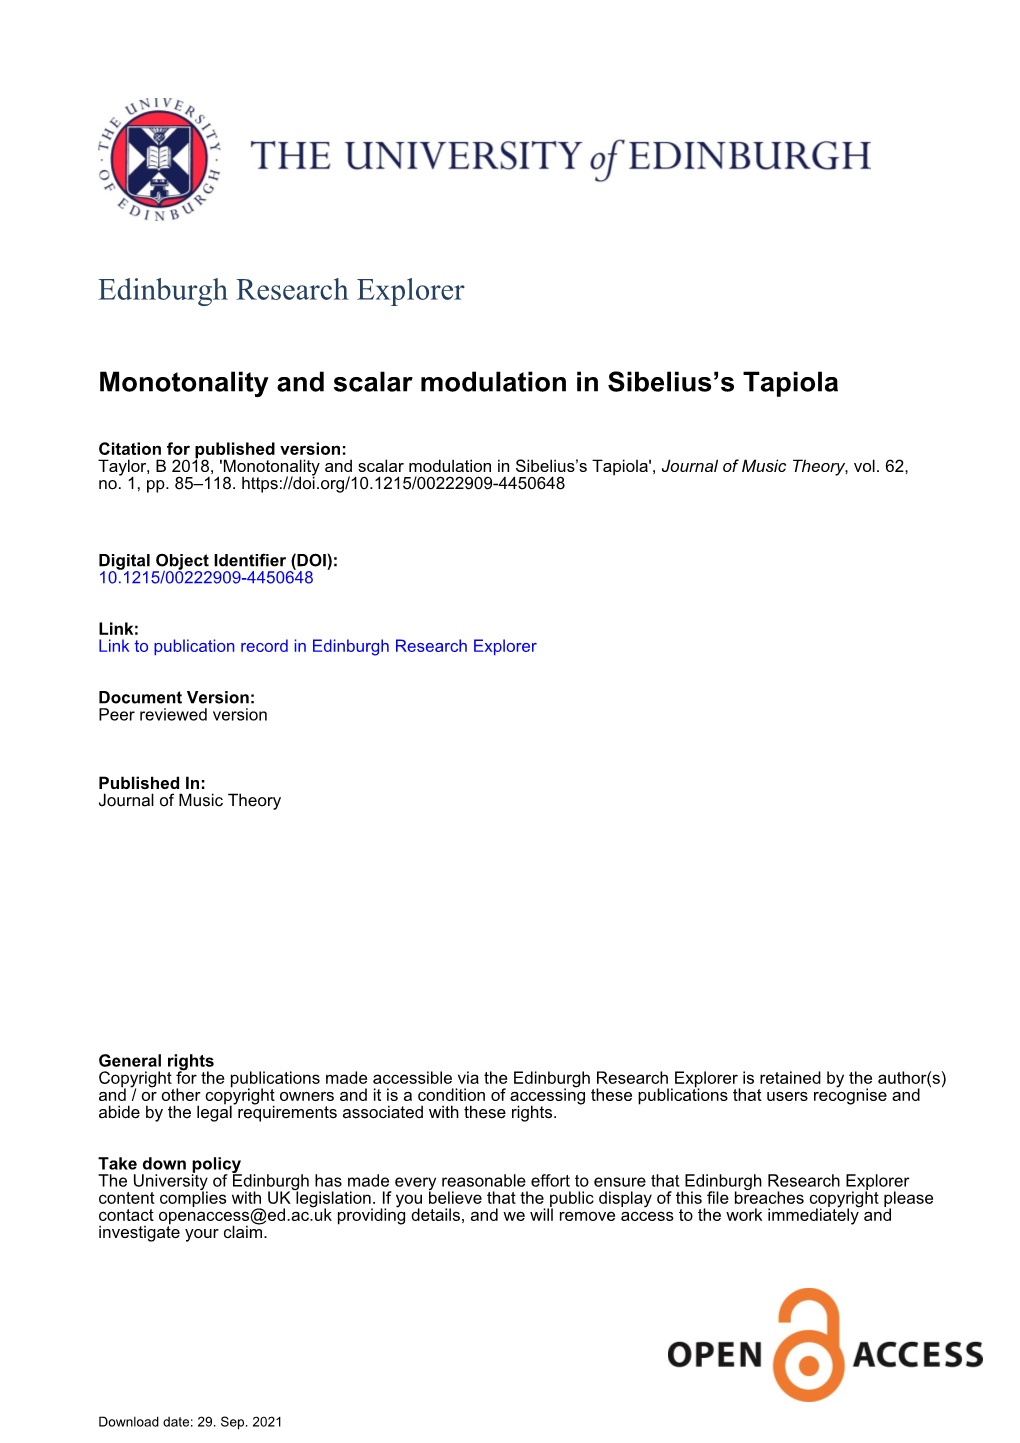 Monotonality and Scalar Modulation in Sibelius's Tapiola